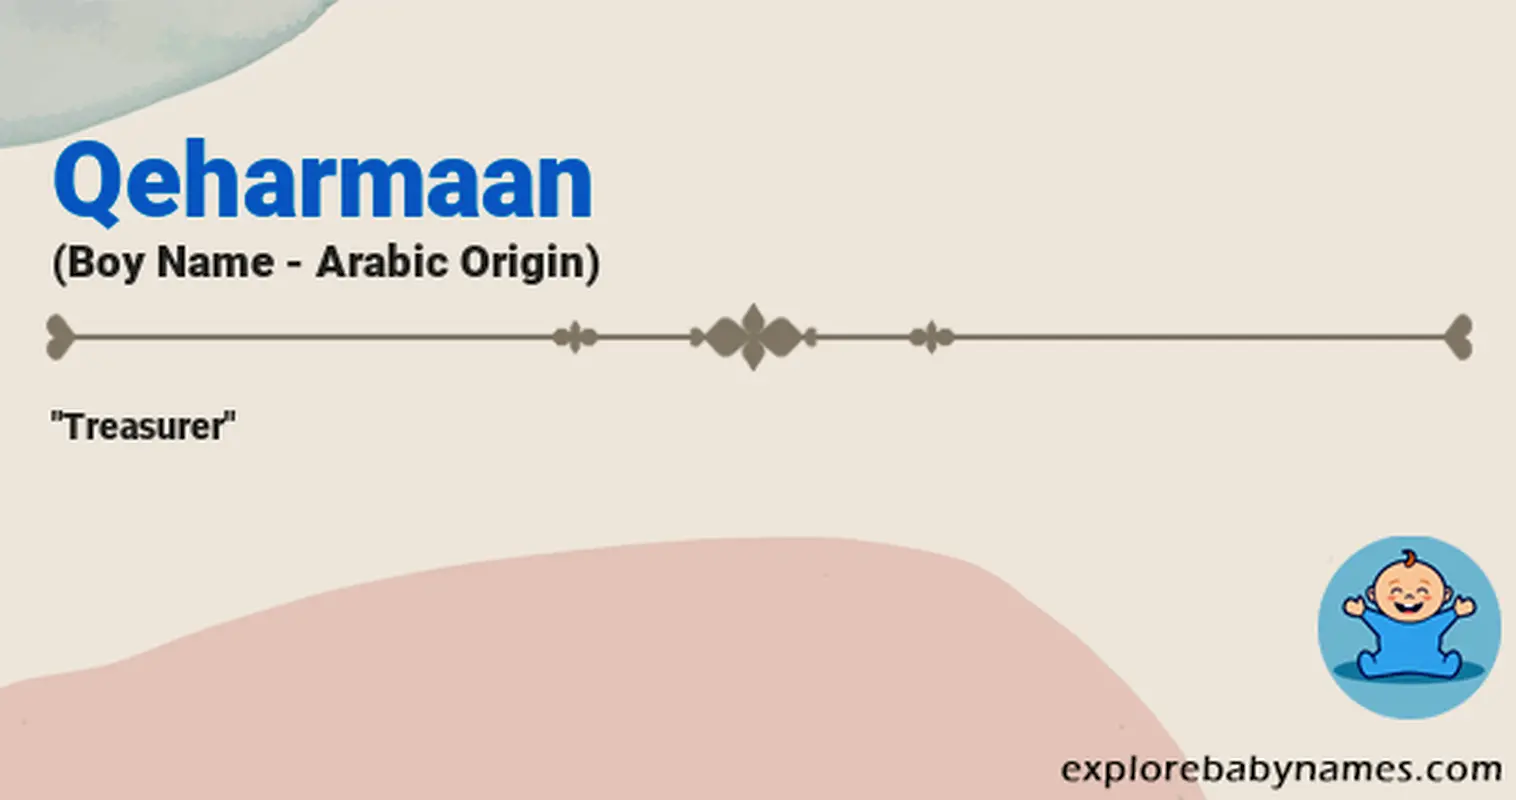 Meaning of Qeharmaan